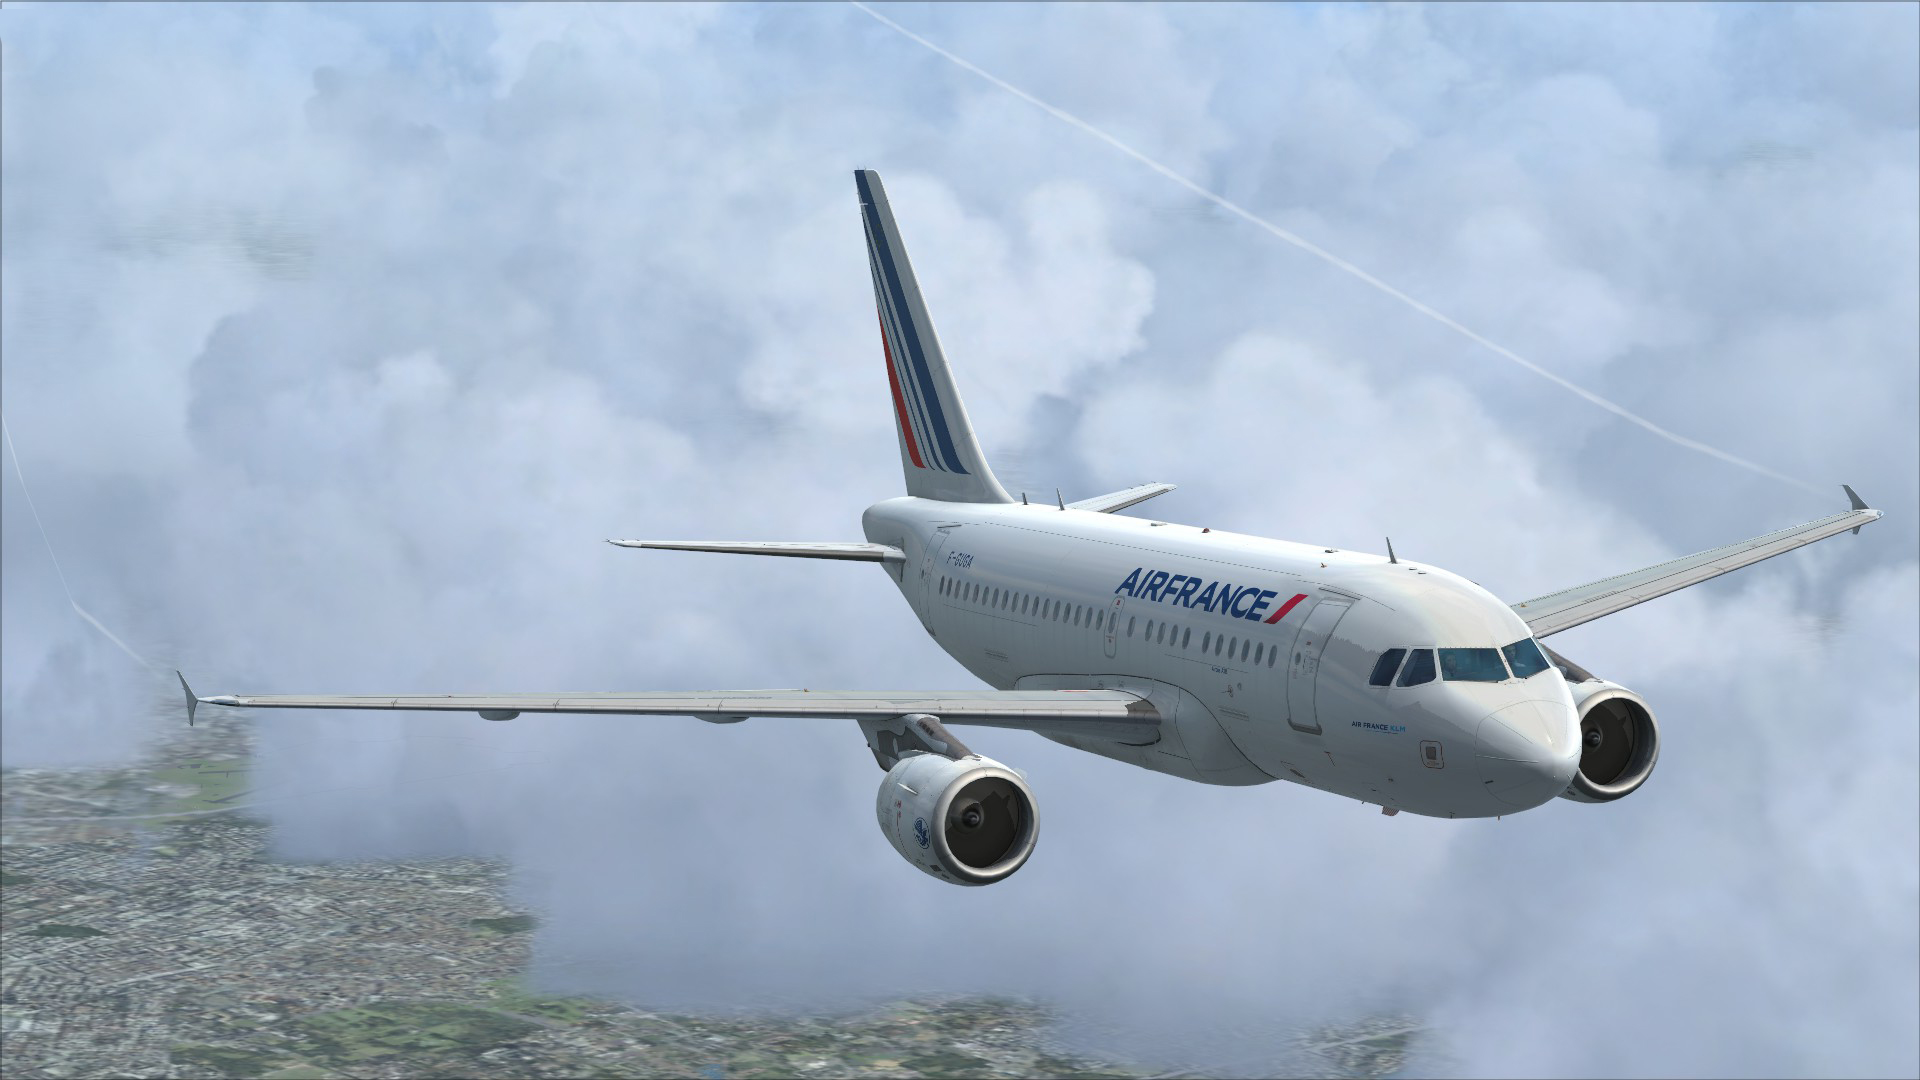 Aerosoft - The Microsoft Flight Simulator DLC Aerosoft Aircraft